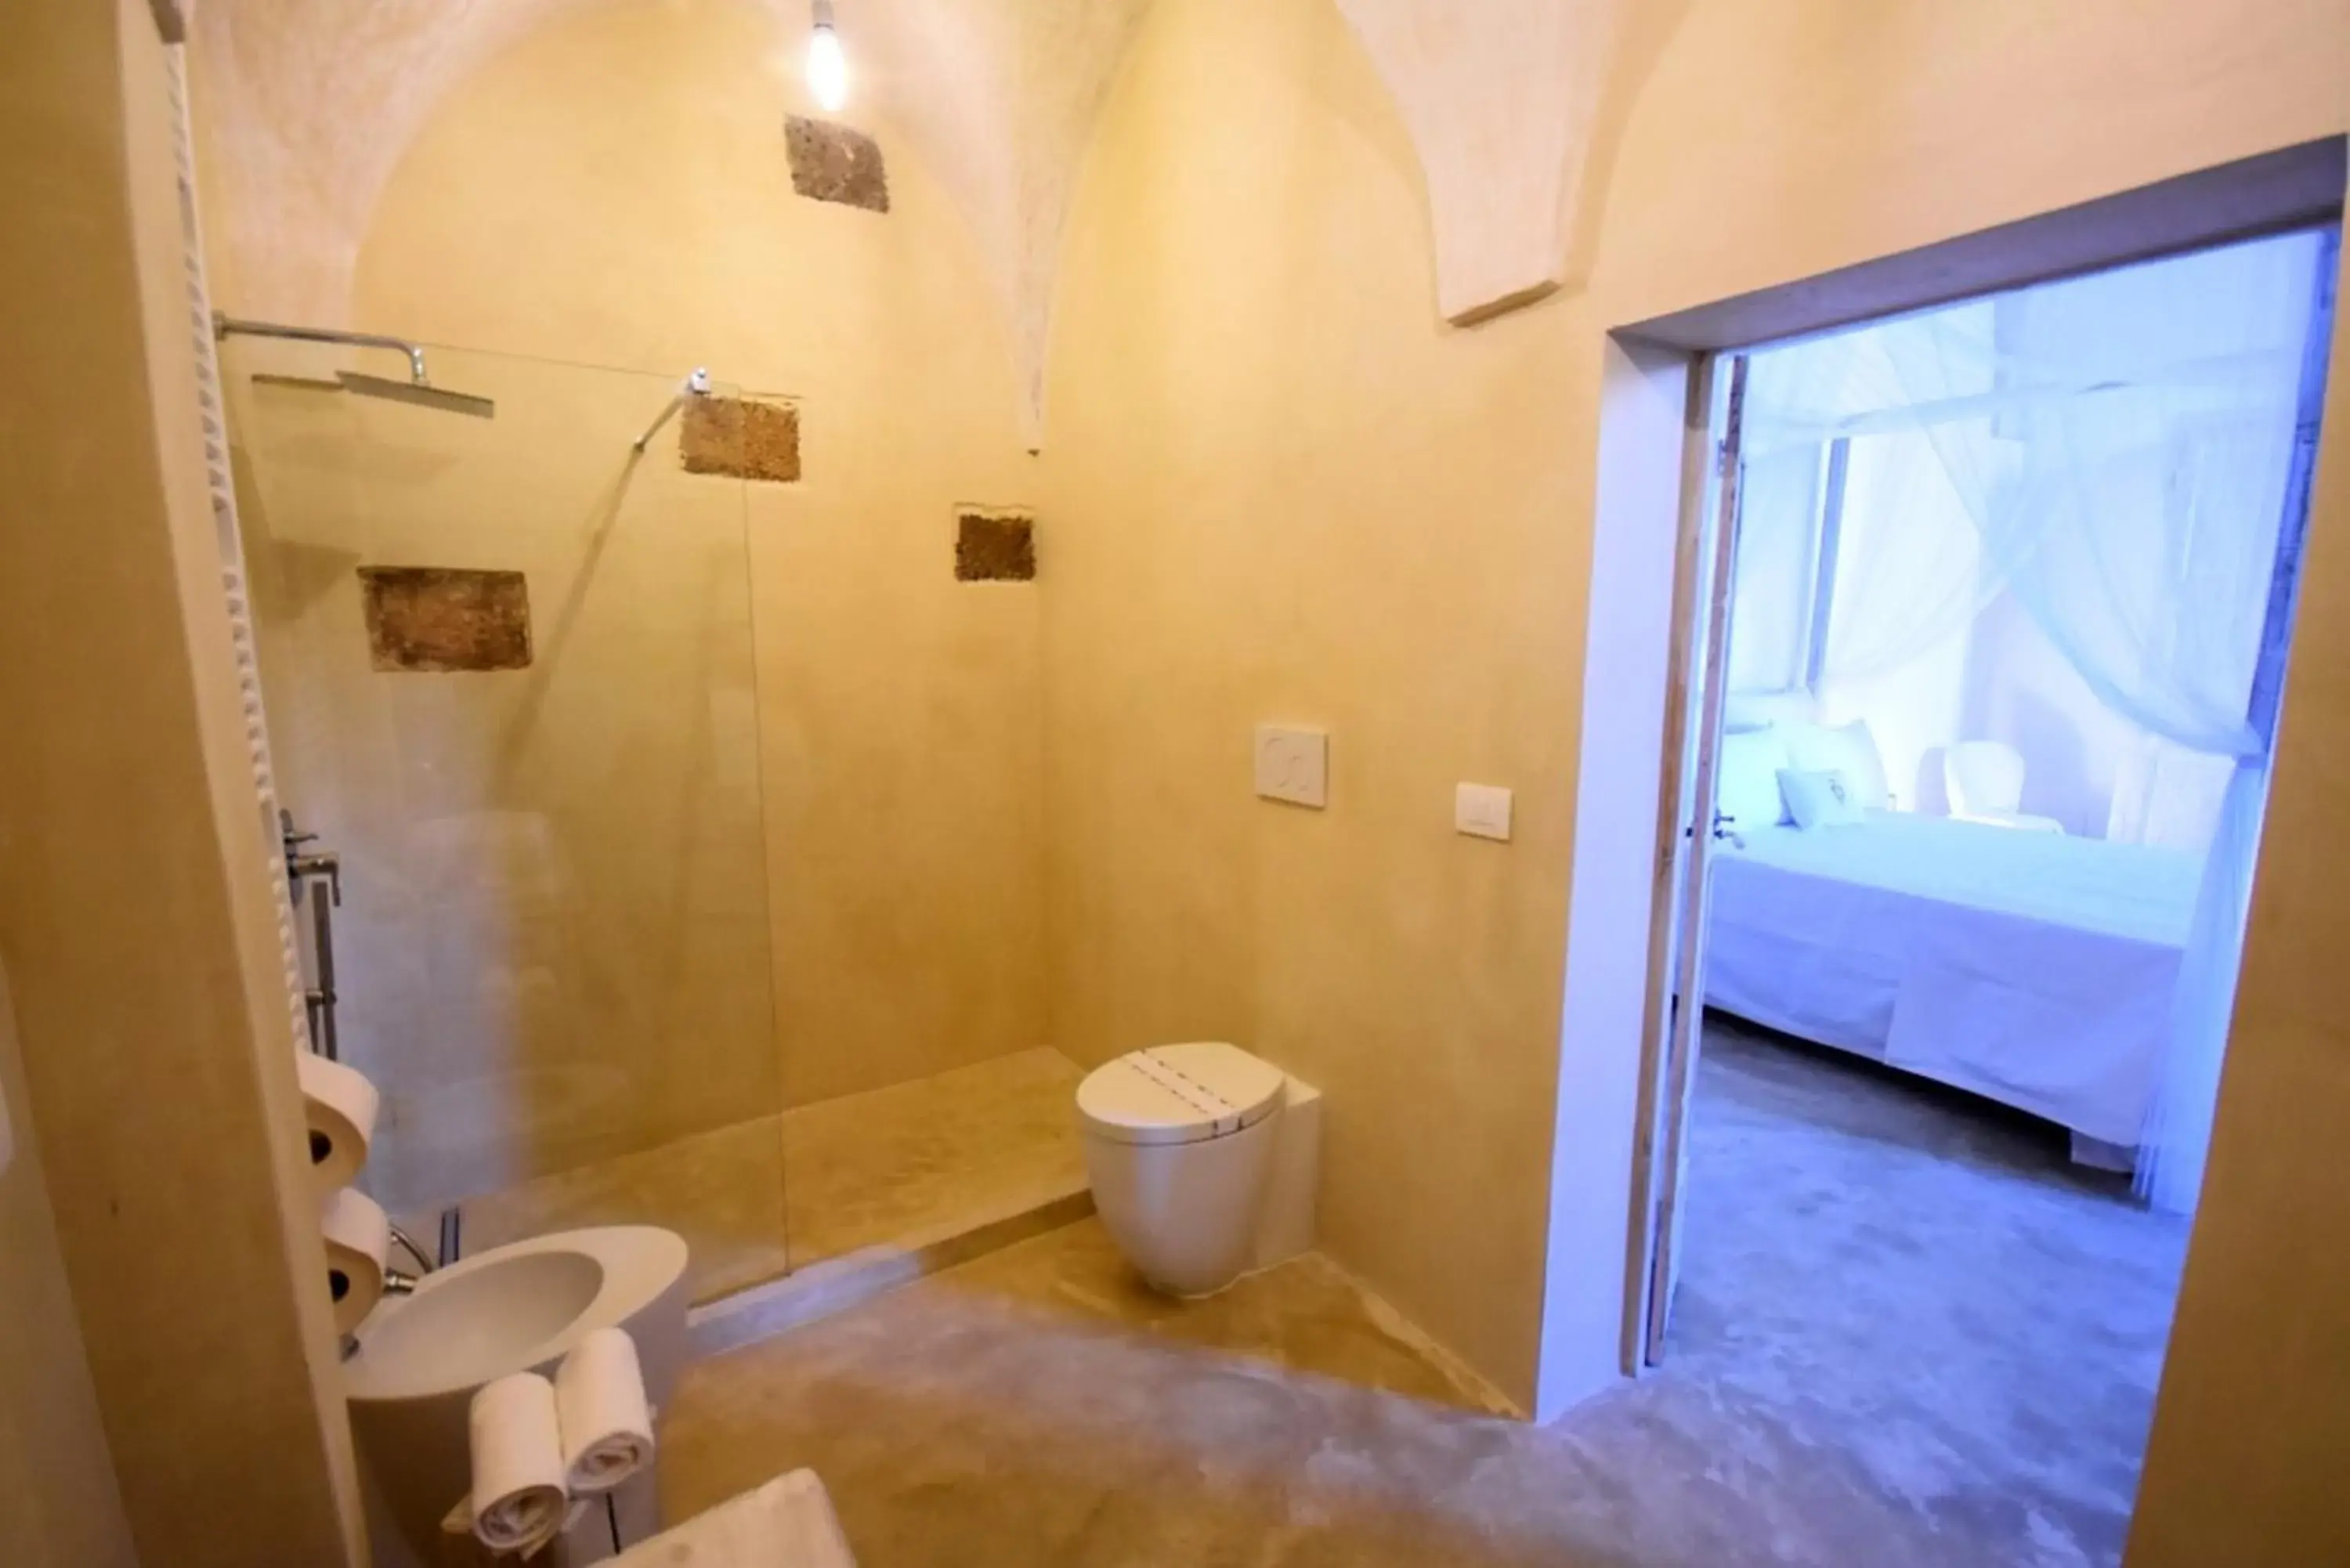 Bathroom in Palazzo Castriota Scanderberg